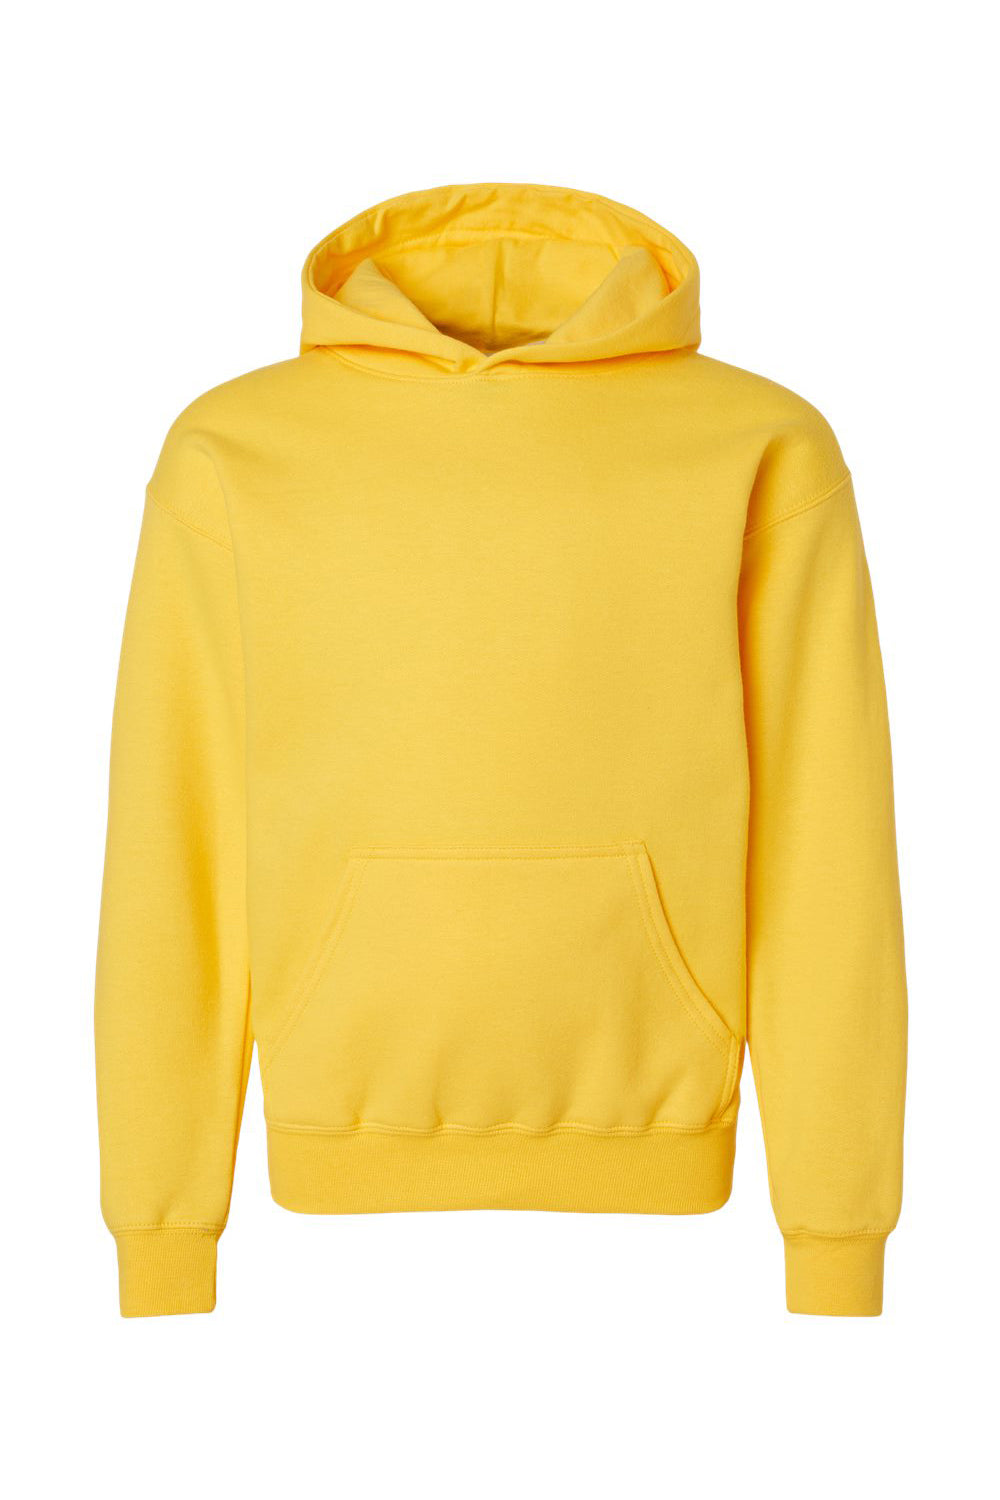 Gildan SF500B Youth Softstyle Hooded Sweatshirt Hoodie Daisy Yellow Flat Front